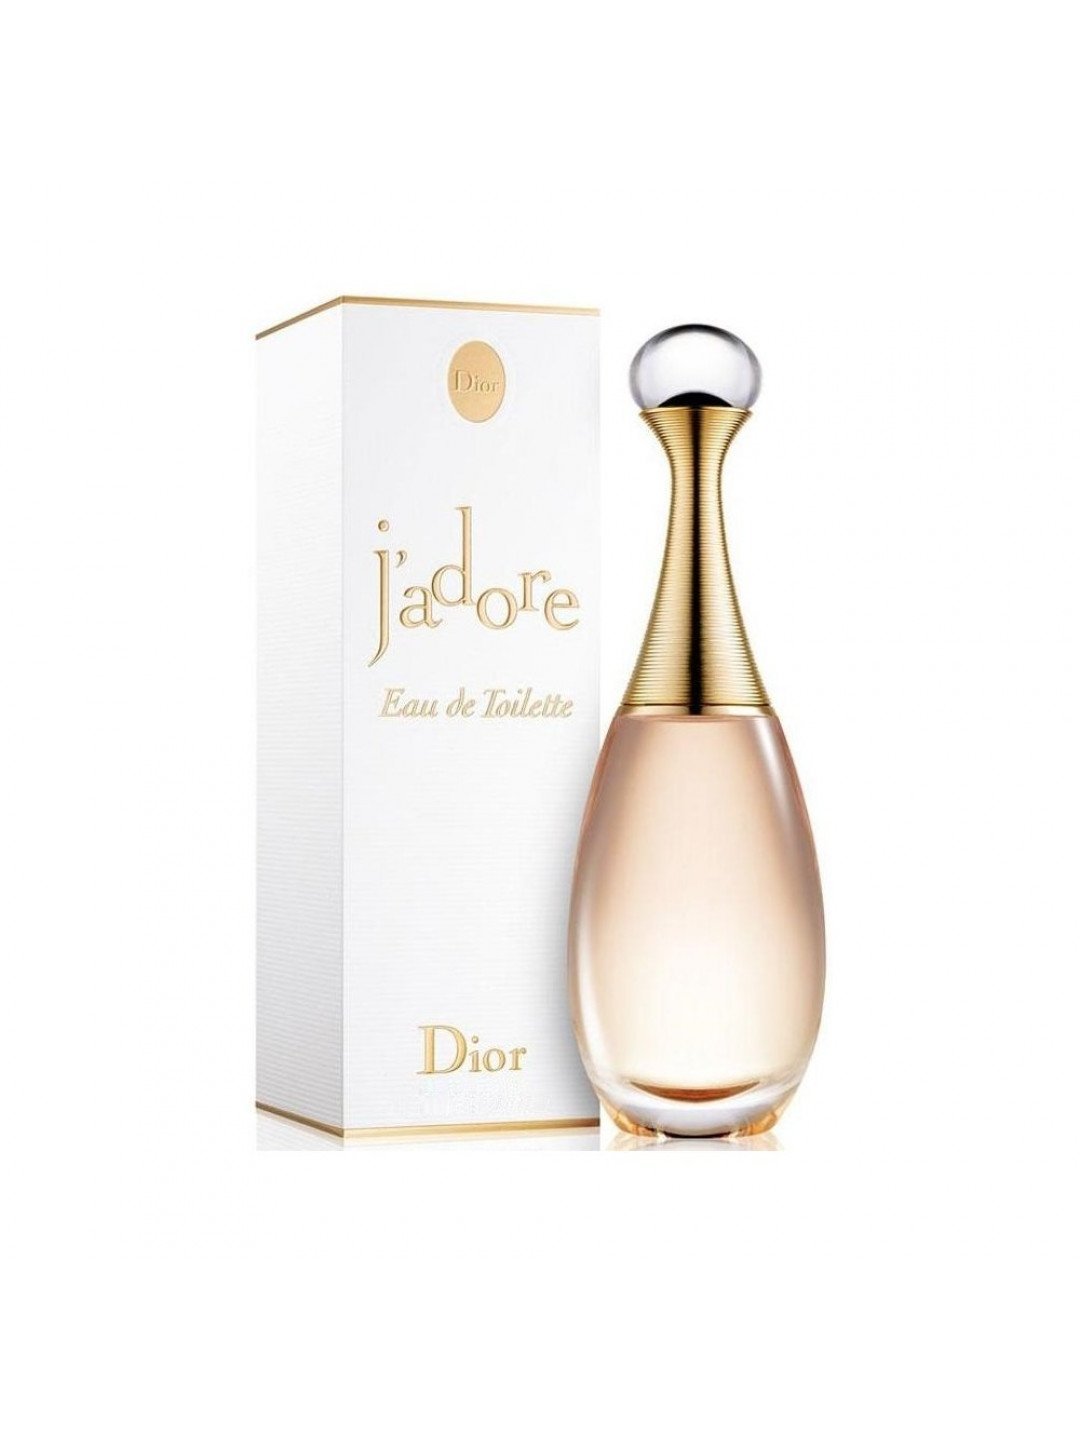 Dior J adore – EDT 100 ml